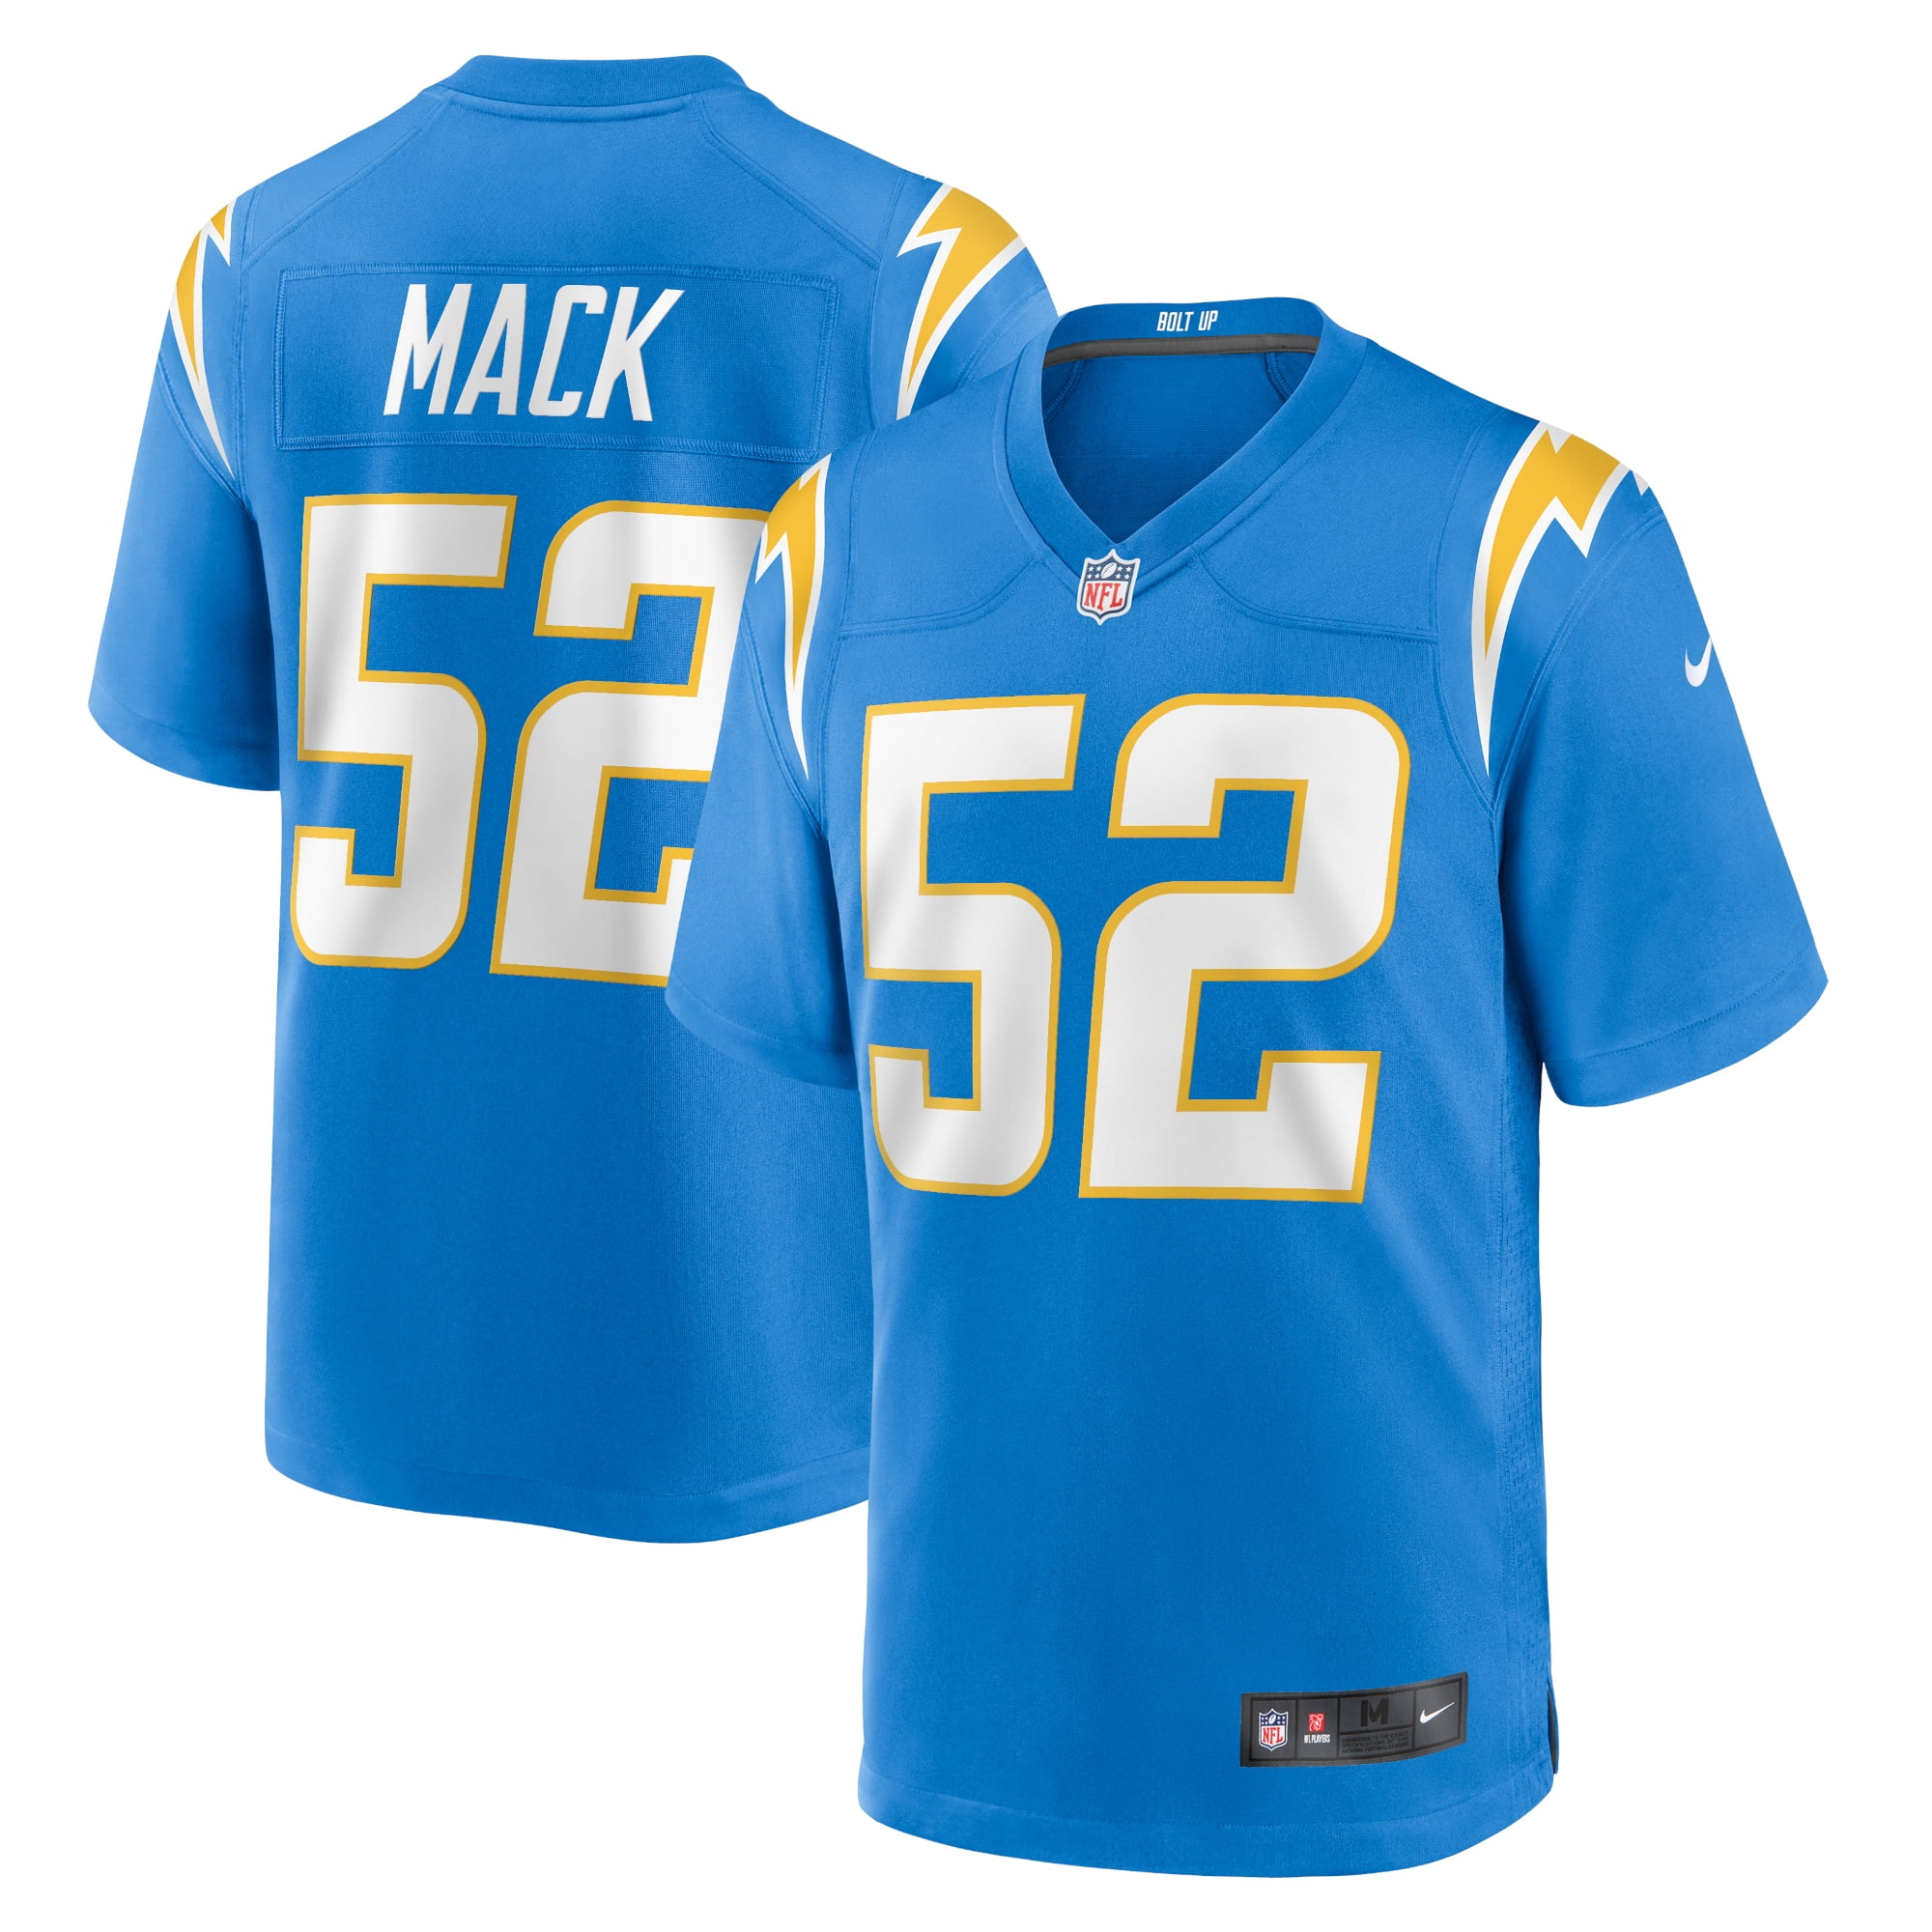 Mack Khalil replica jersey